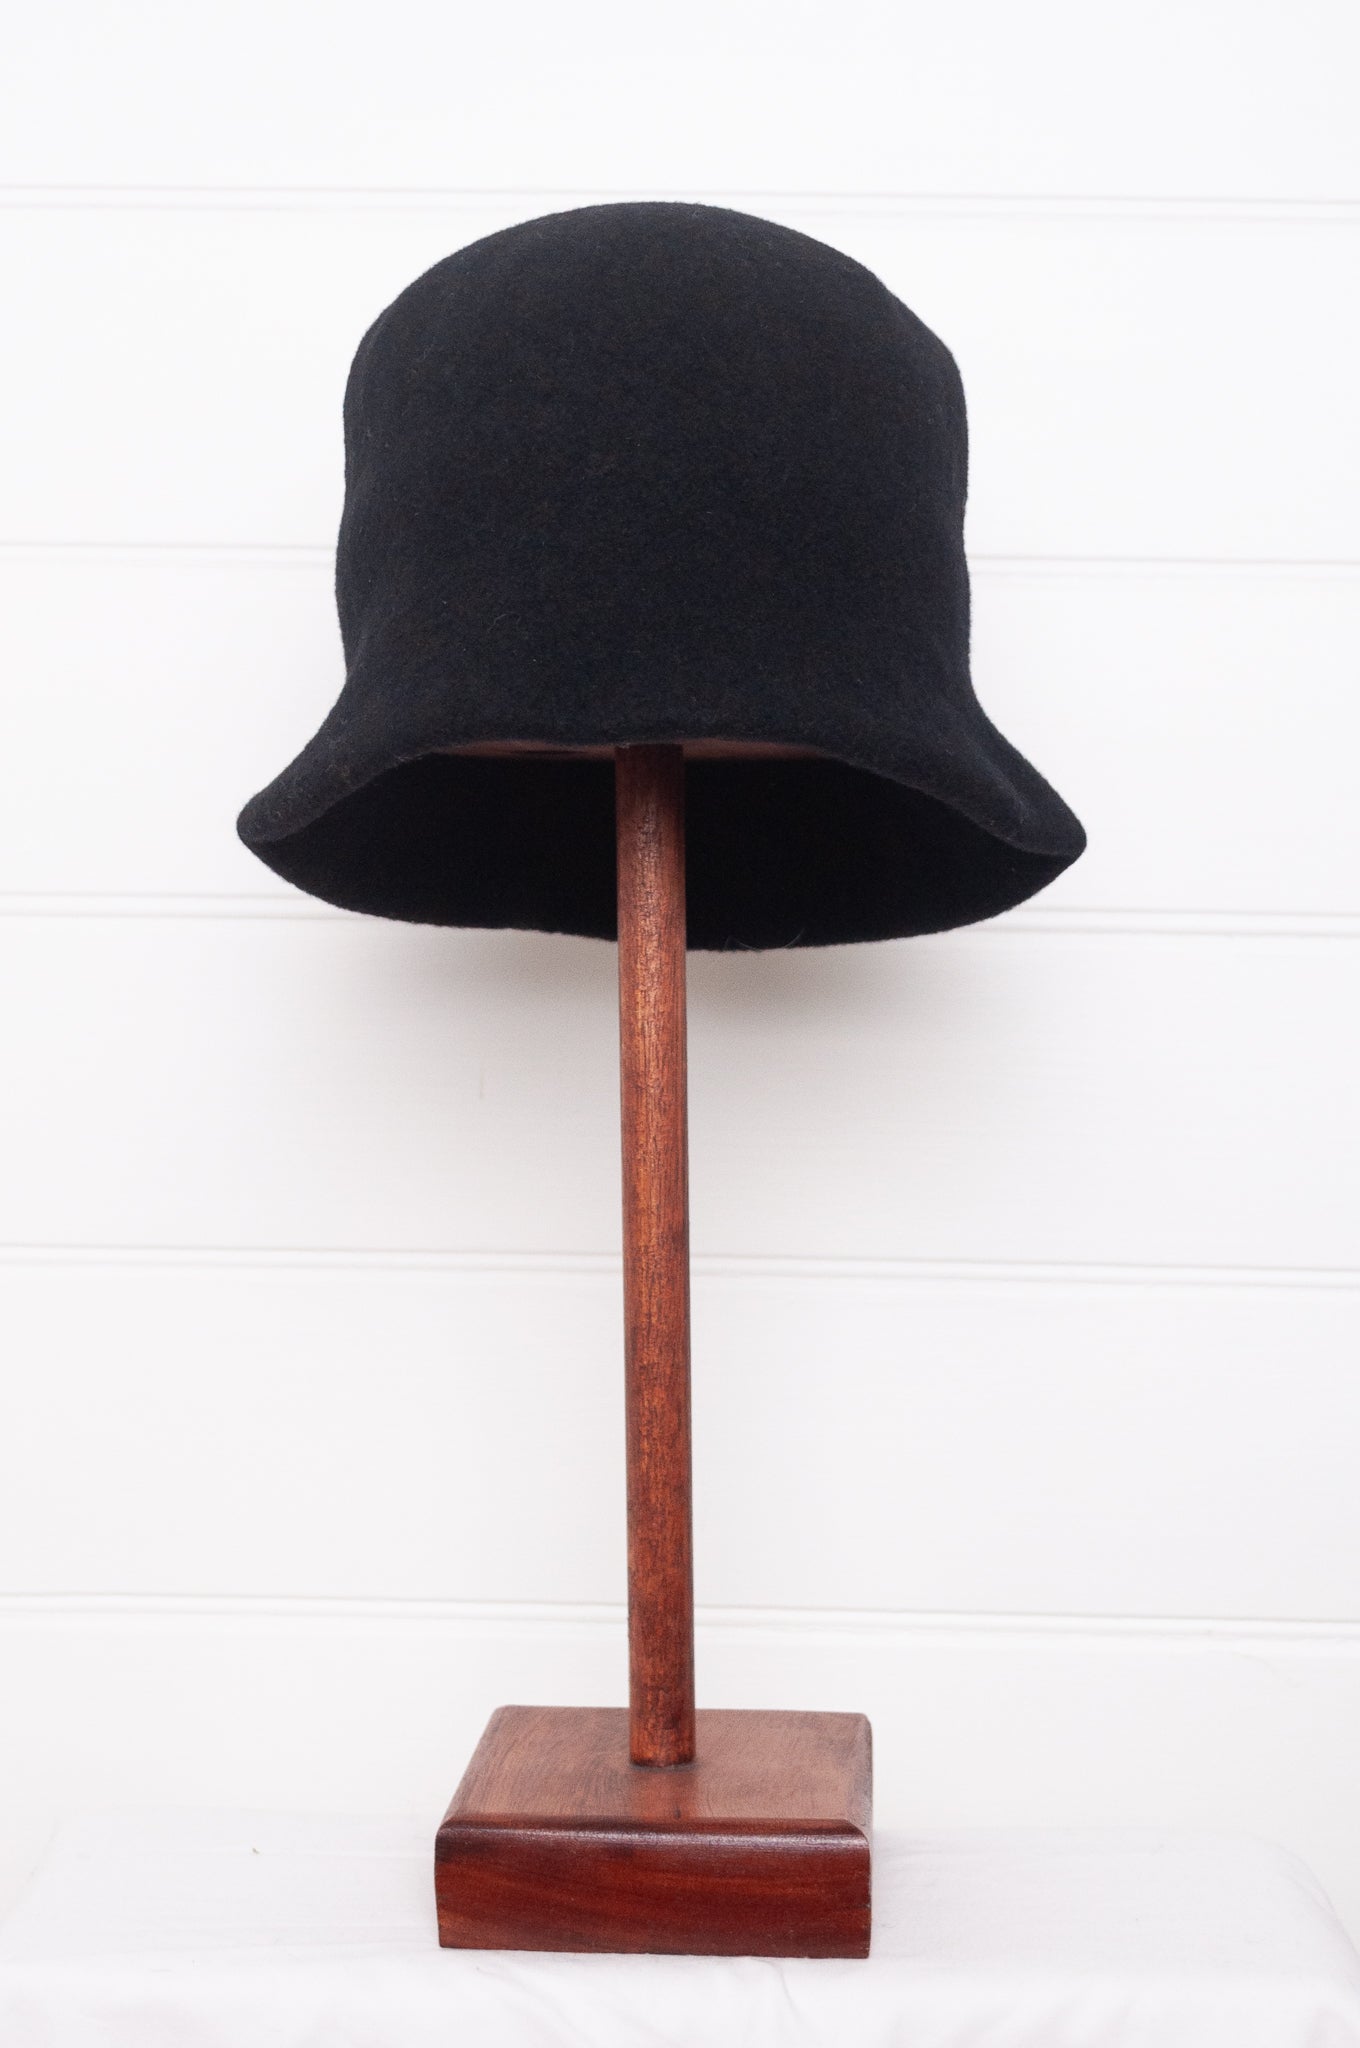 PCNQ made in Japan wool felt bucket hat, Kevin in black.